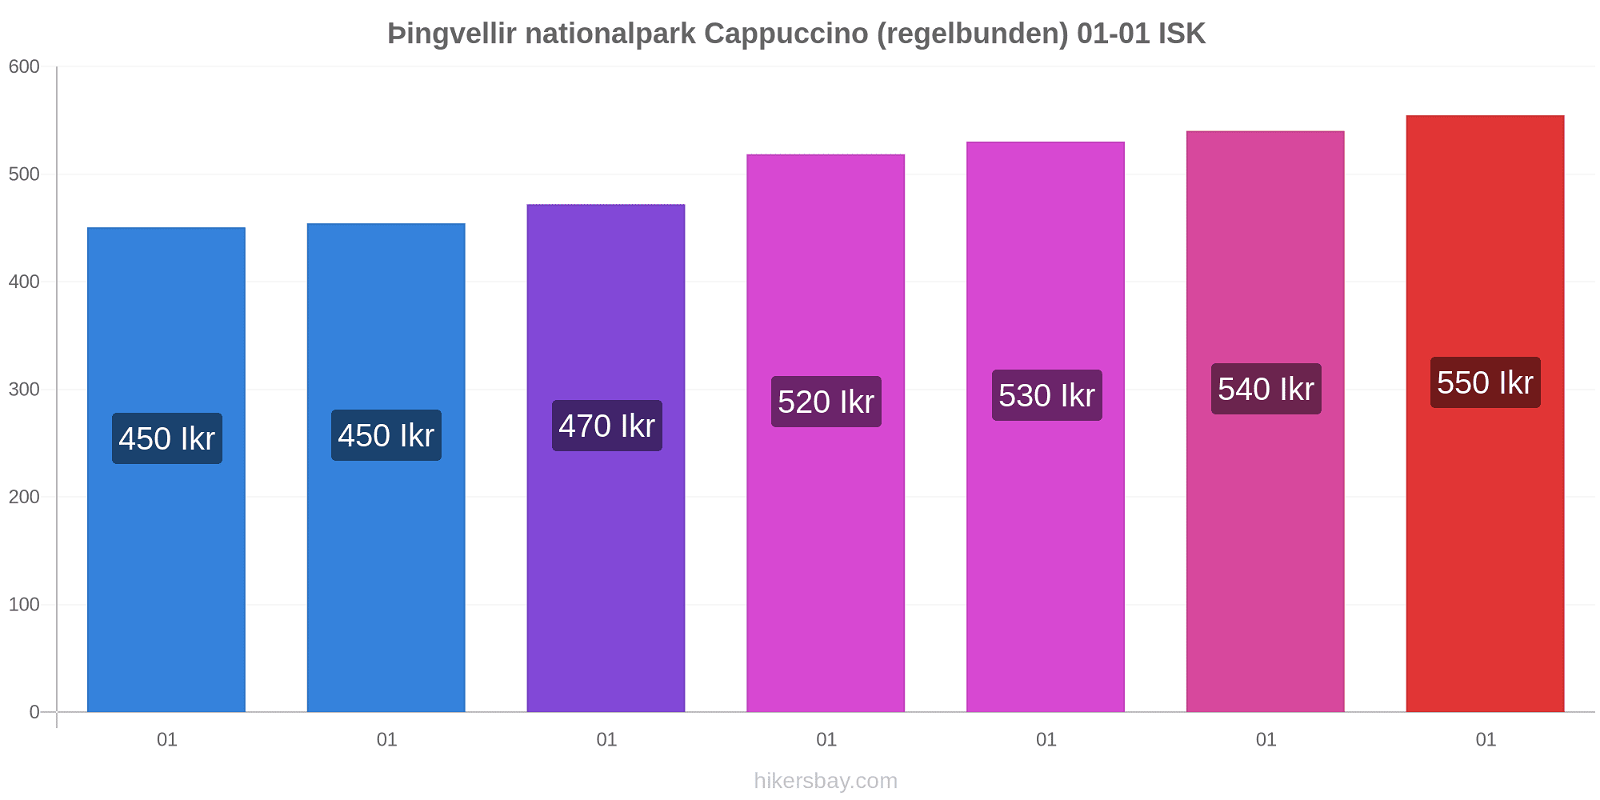 Þingvellir nationalpark prisförändringar Cappuccino (regelbunden) hikersbay.com